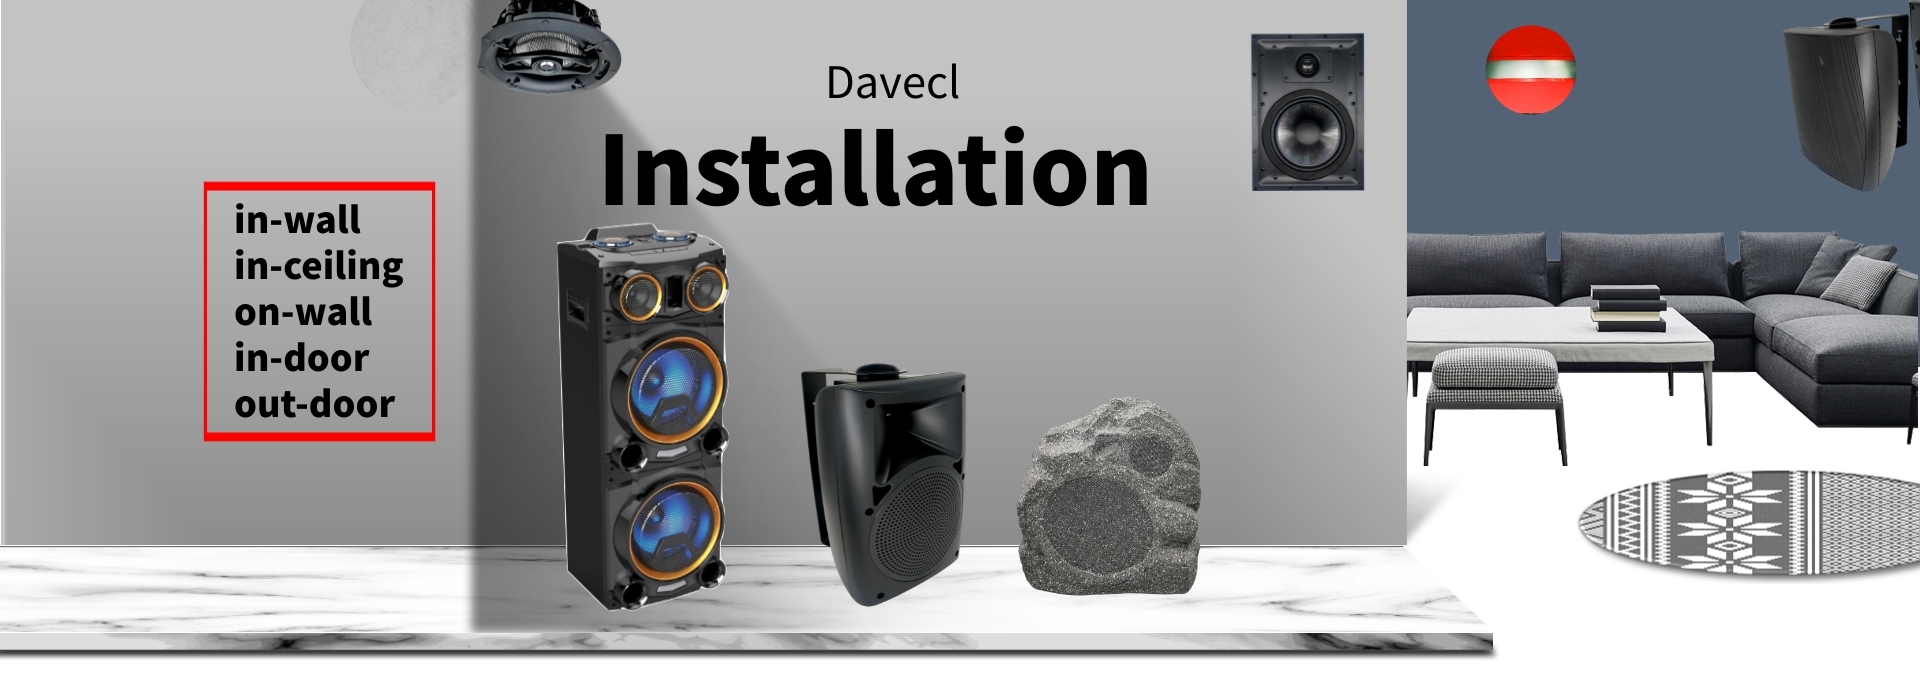 Davecl installation